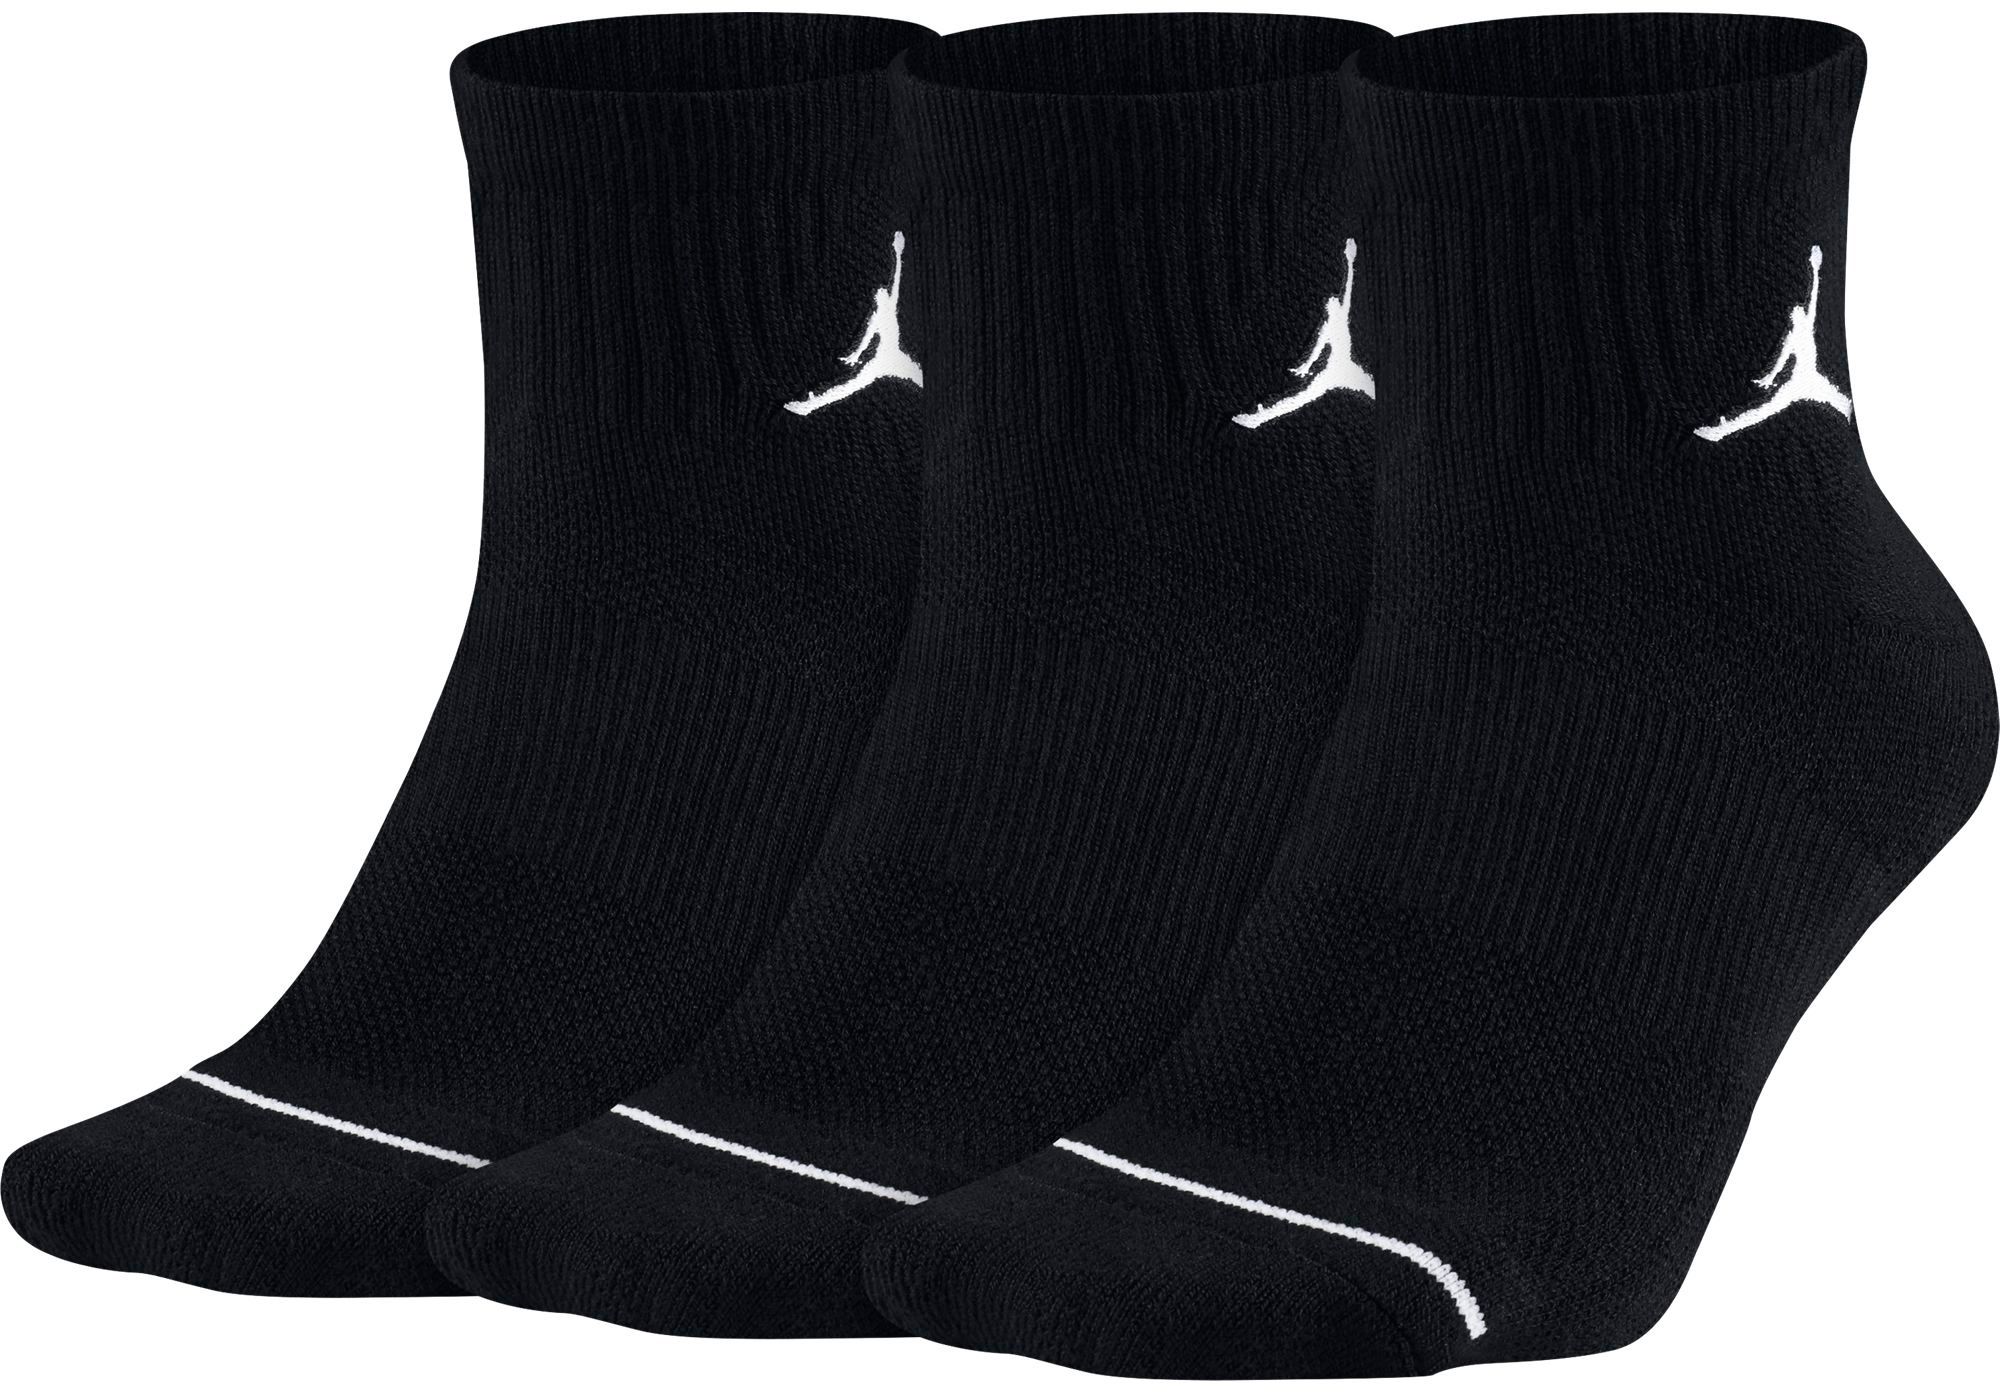 Jordan Everyday Max Ankle Socks ? 3 Pack